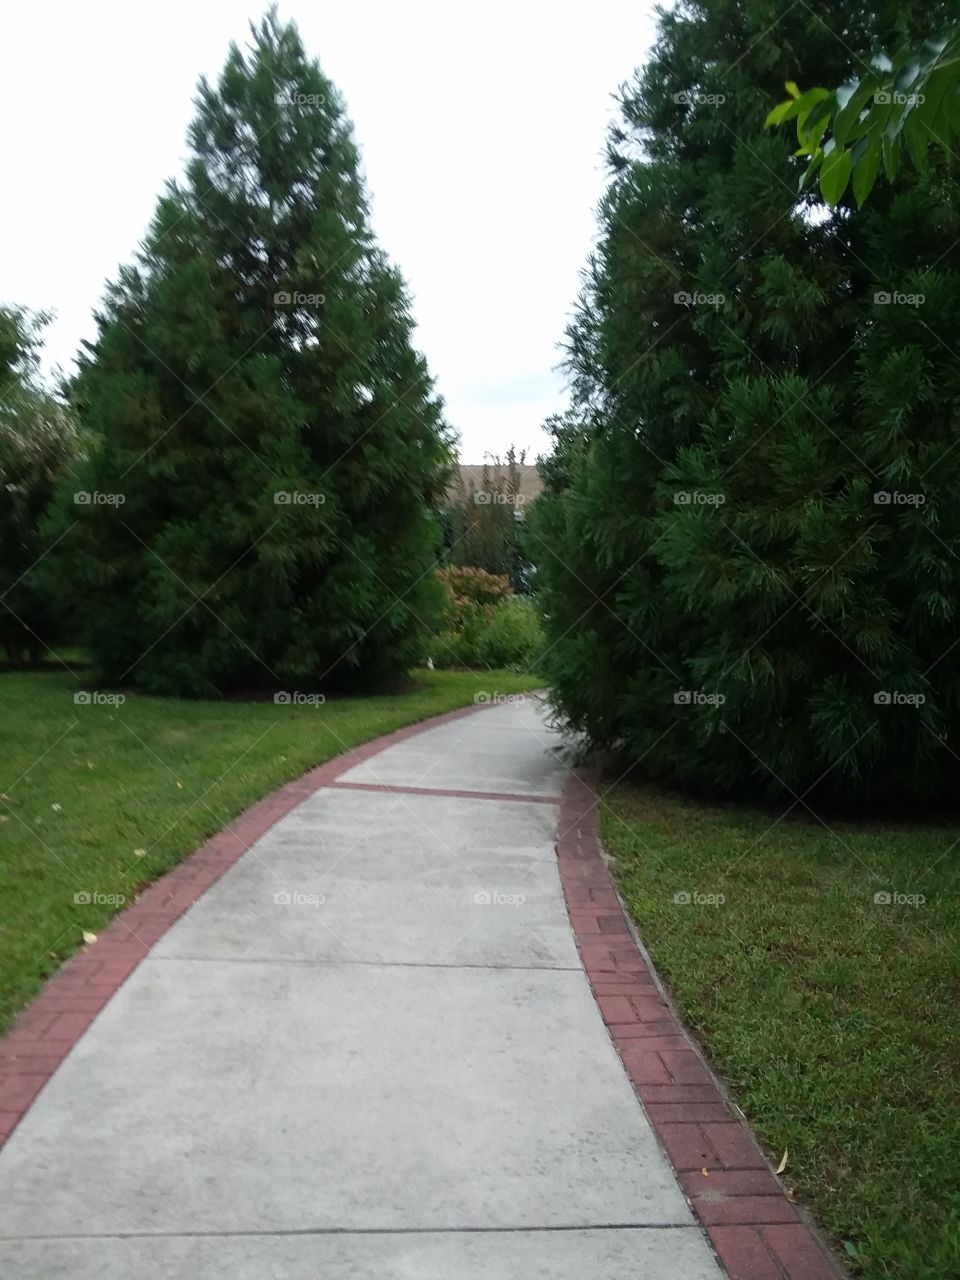 A beautiful day  for following a path through a garden park